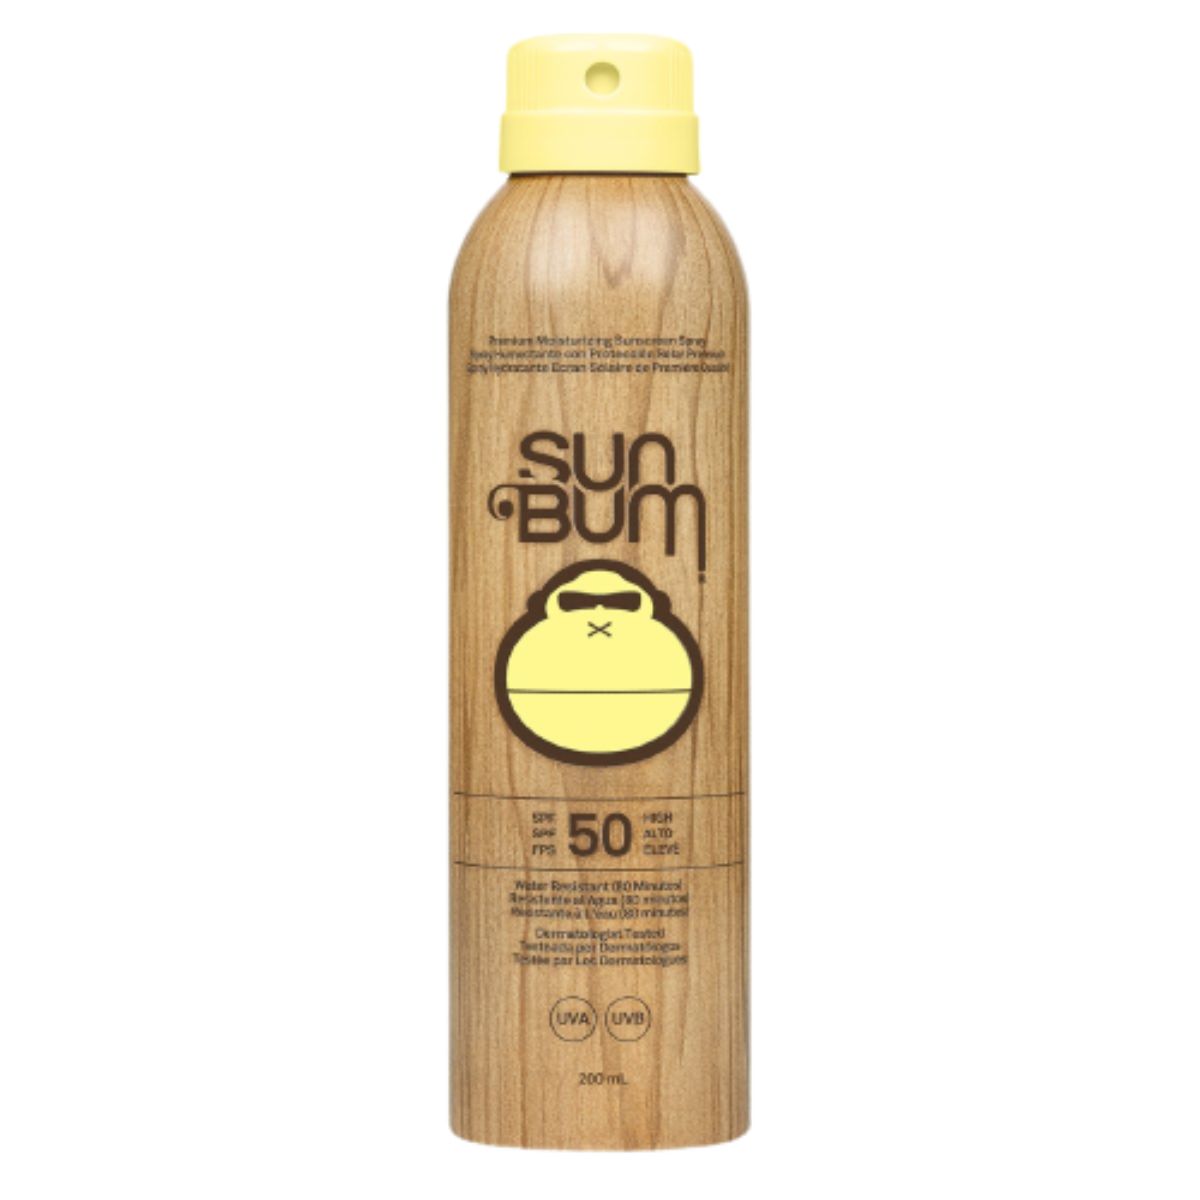 Sun Bum Original SPF 50 Spray